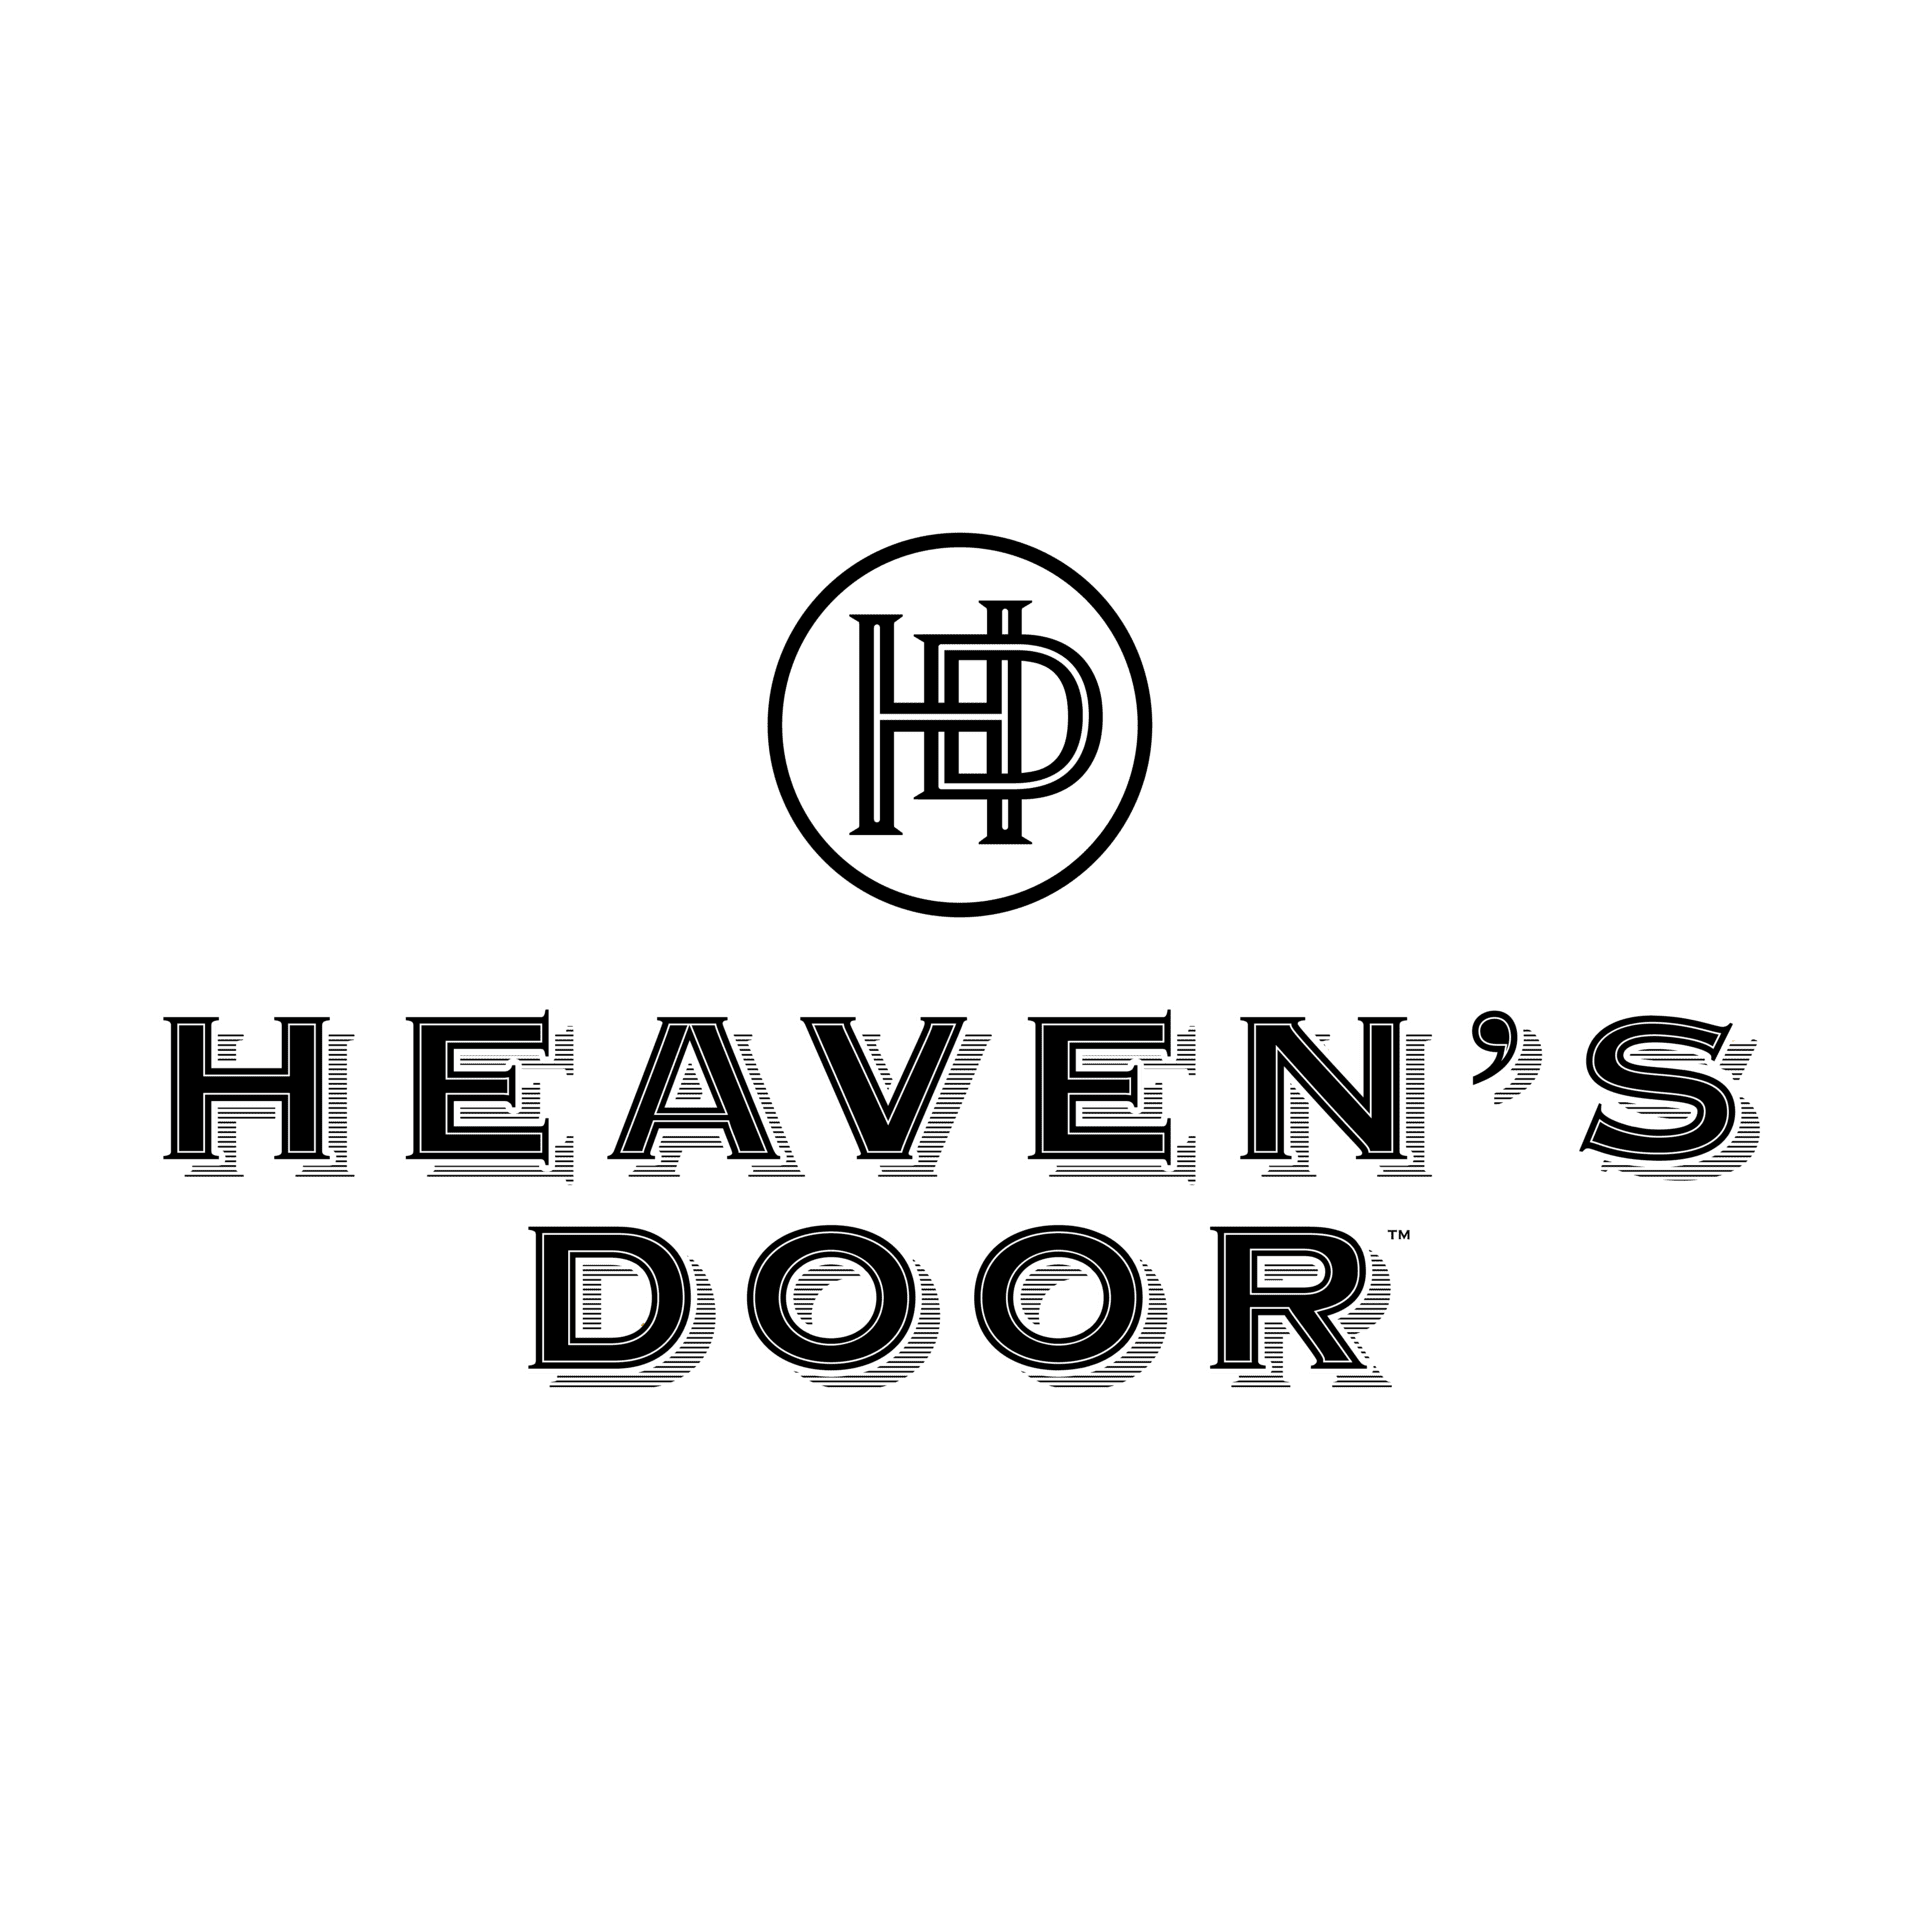 Heavens-Door-Logos_stacked-bw (1)